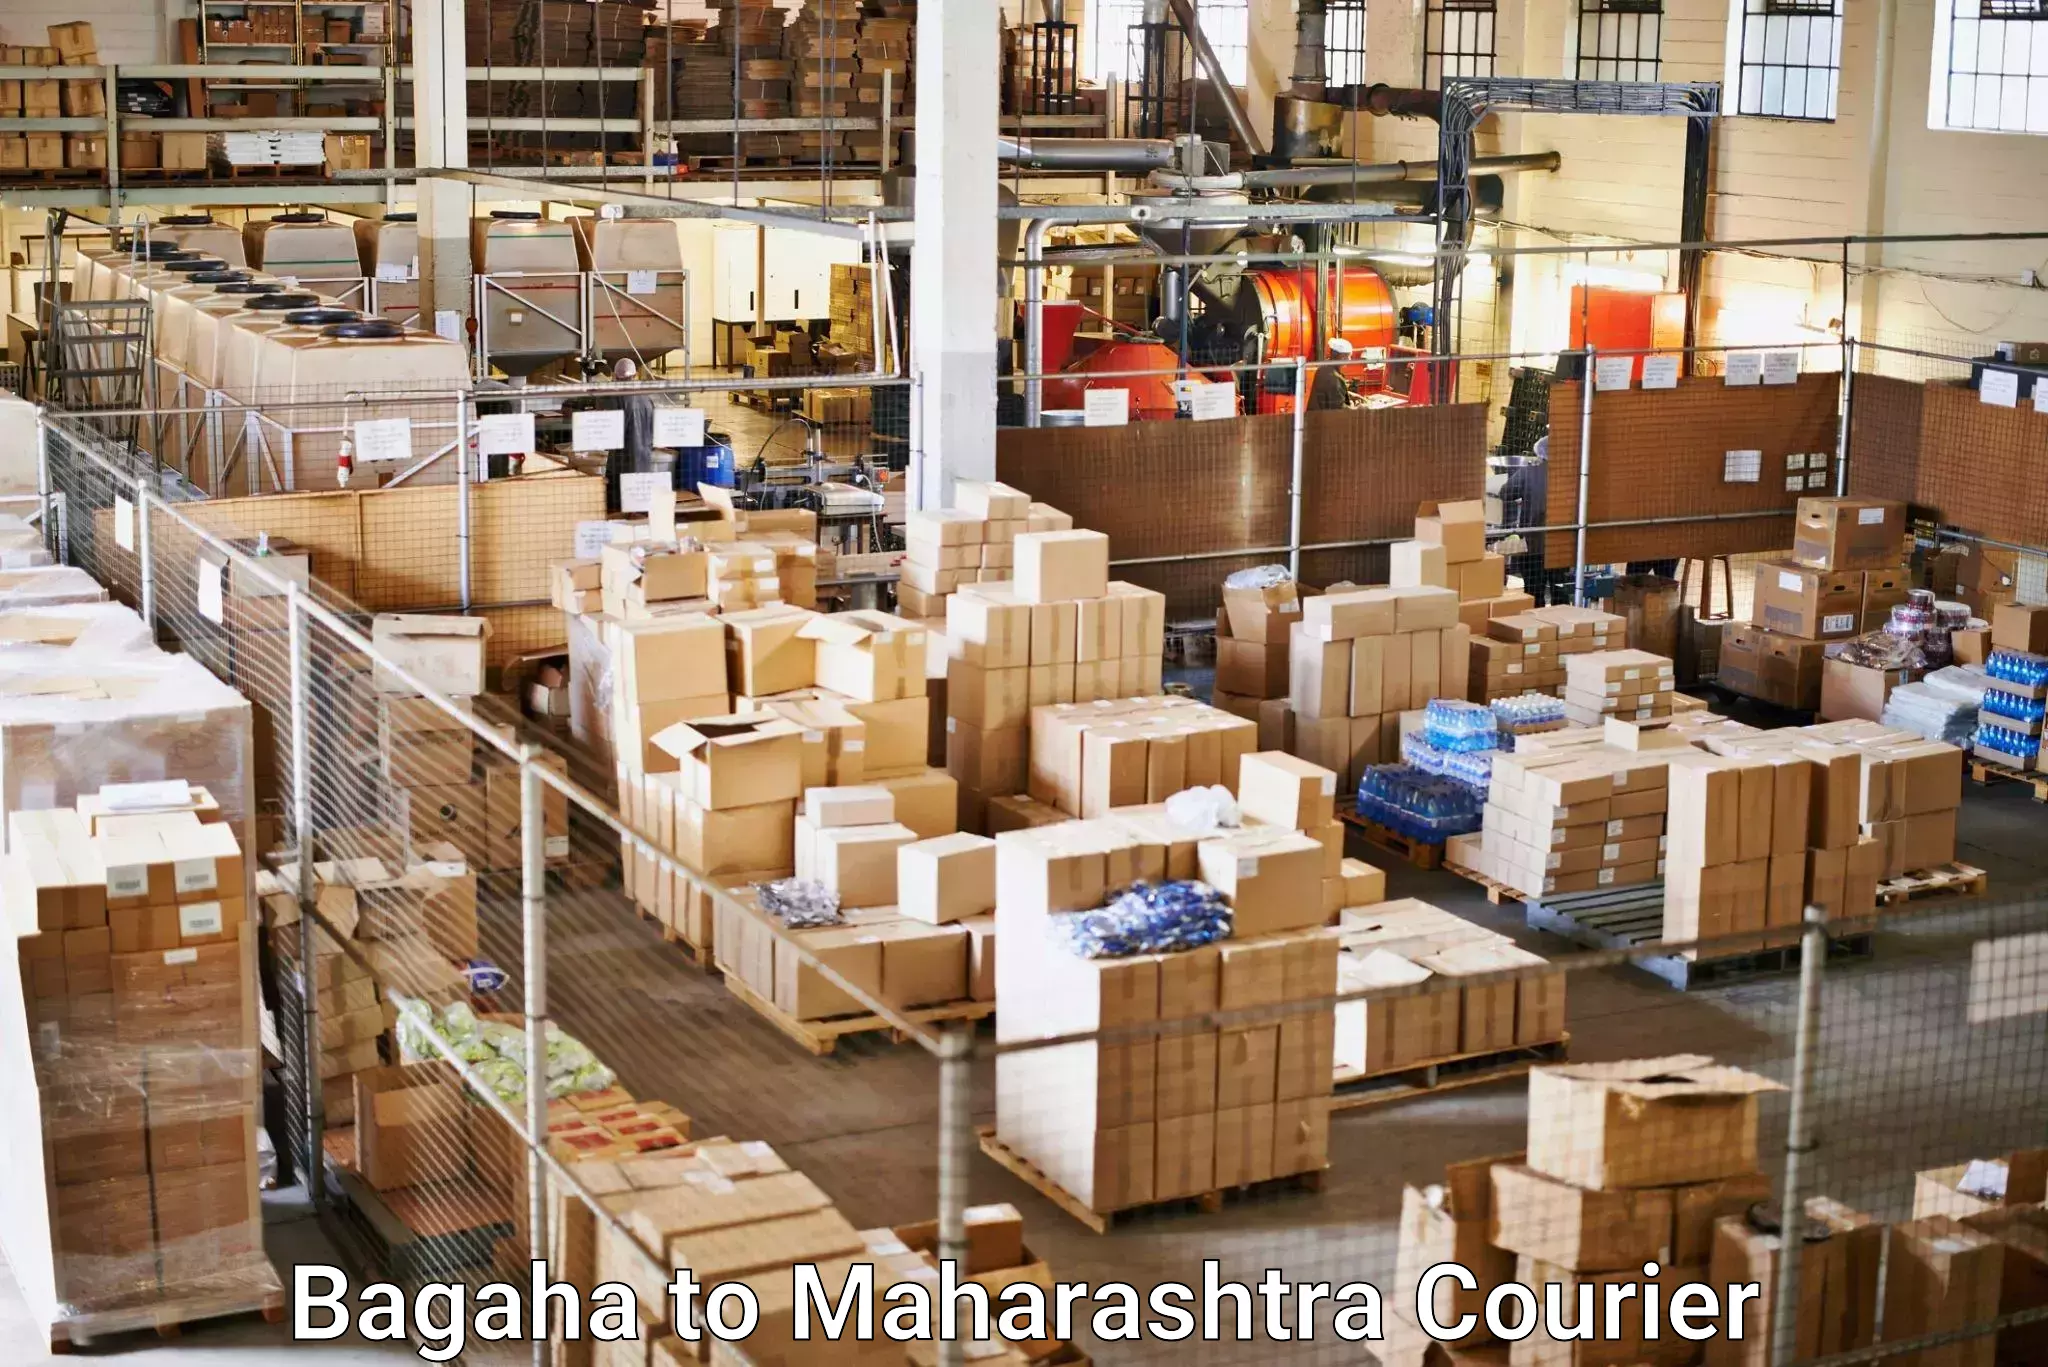 Express shipping in Bagaha to Shindkheda